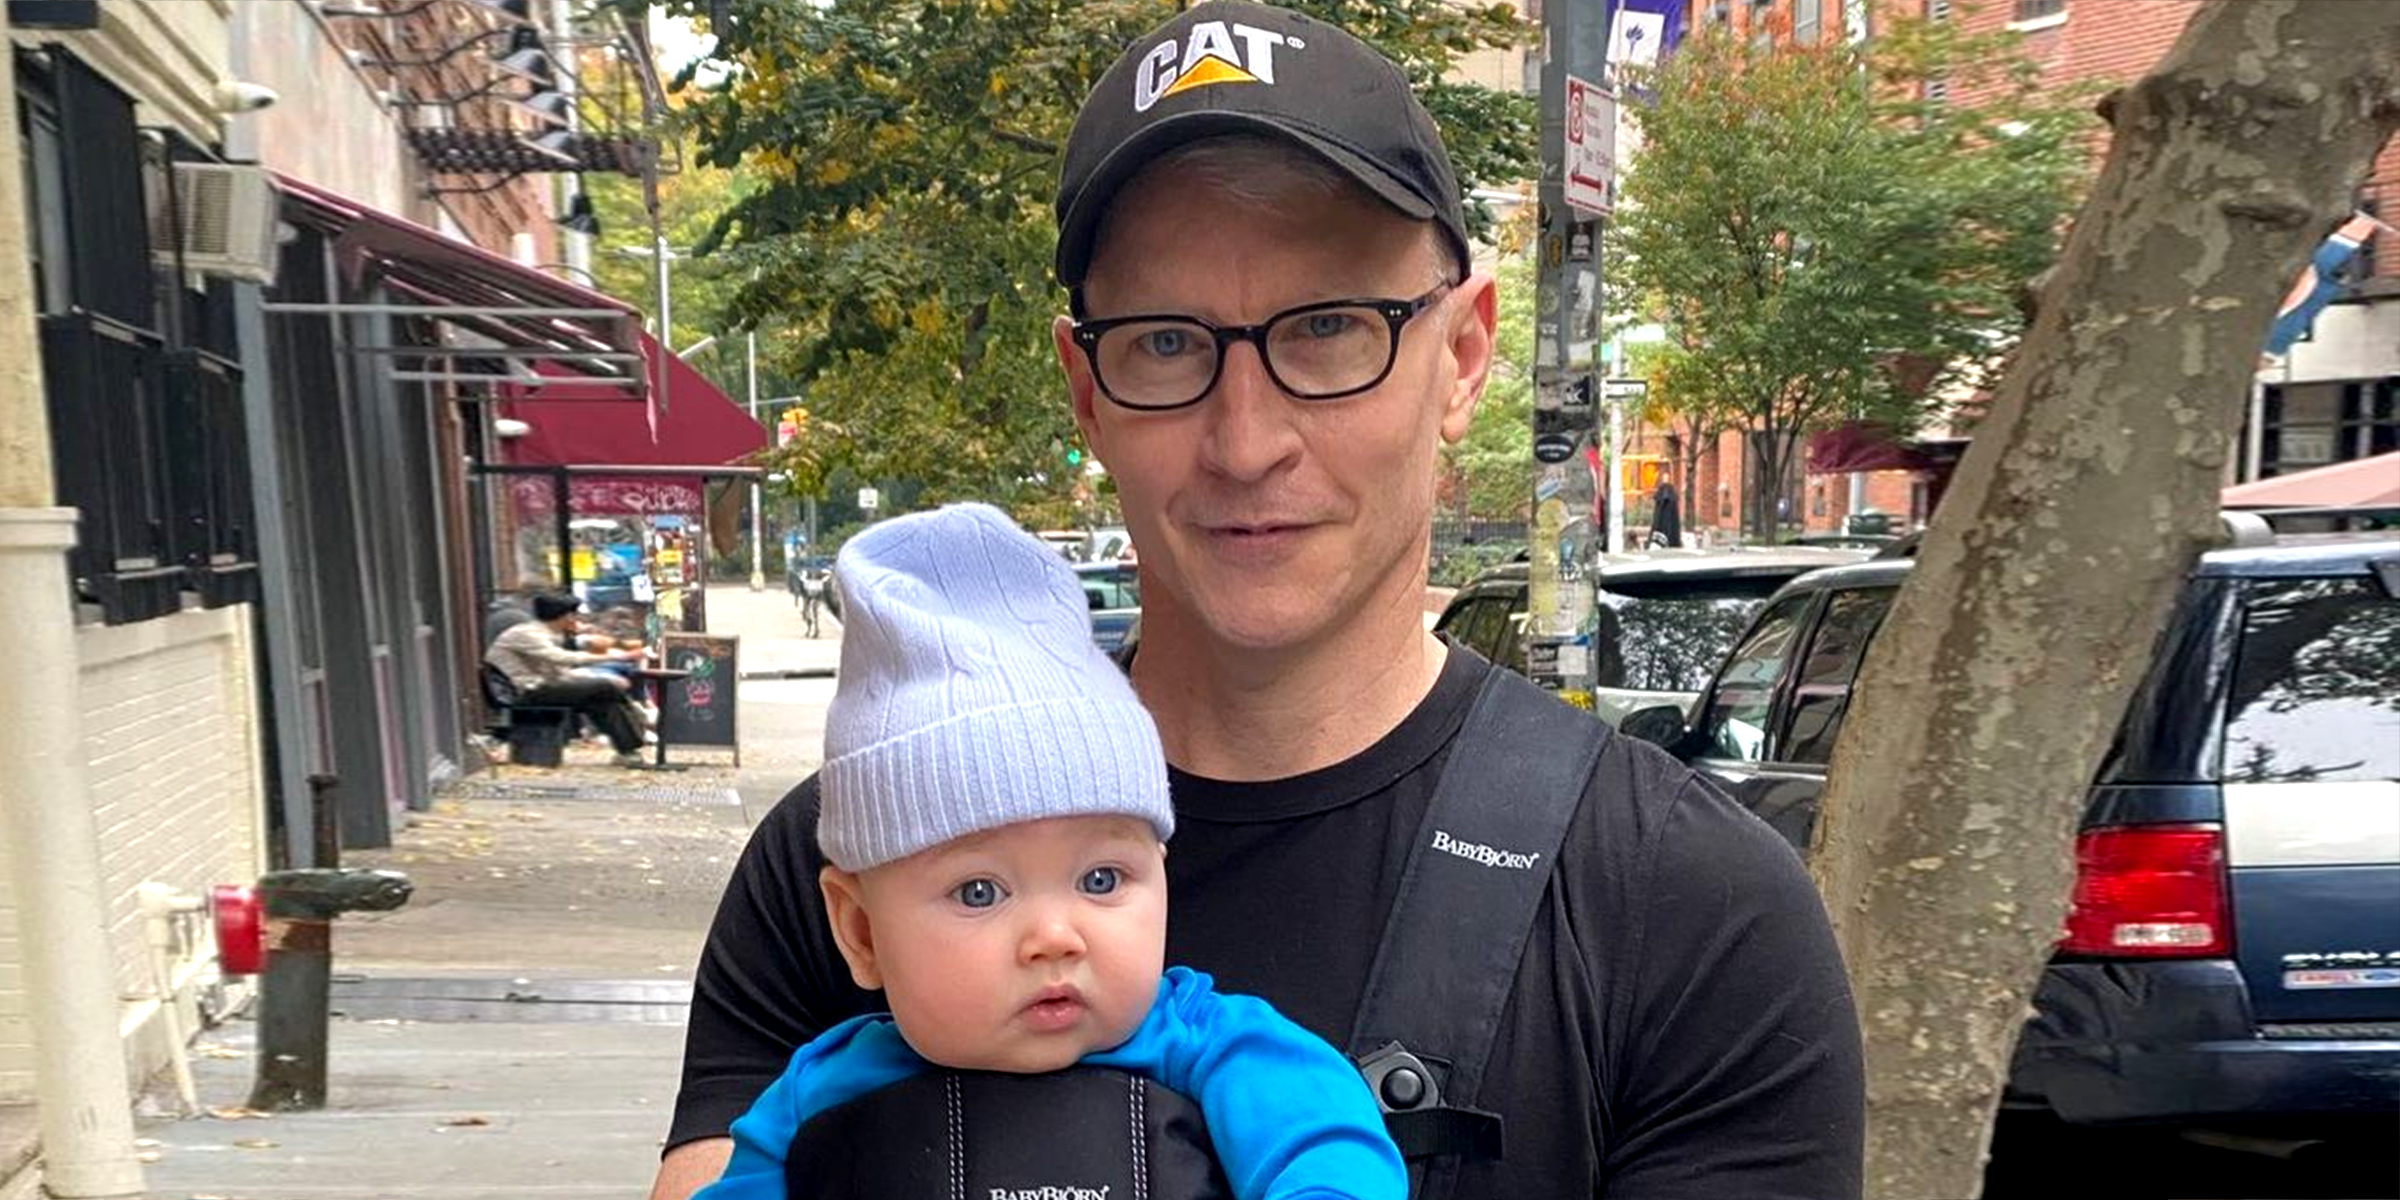 Anderson Cooper with his son Wyatt | Source: Instagram.com/andersoncooper/